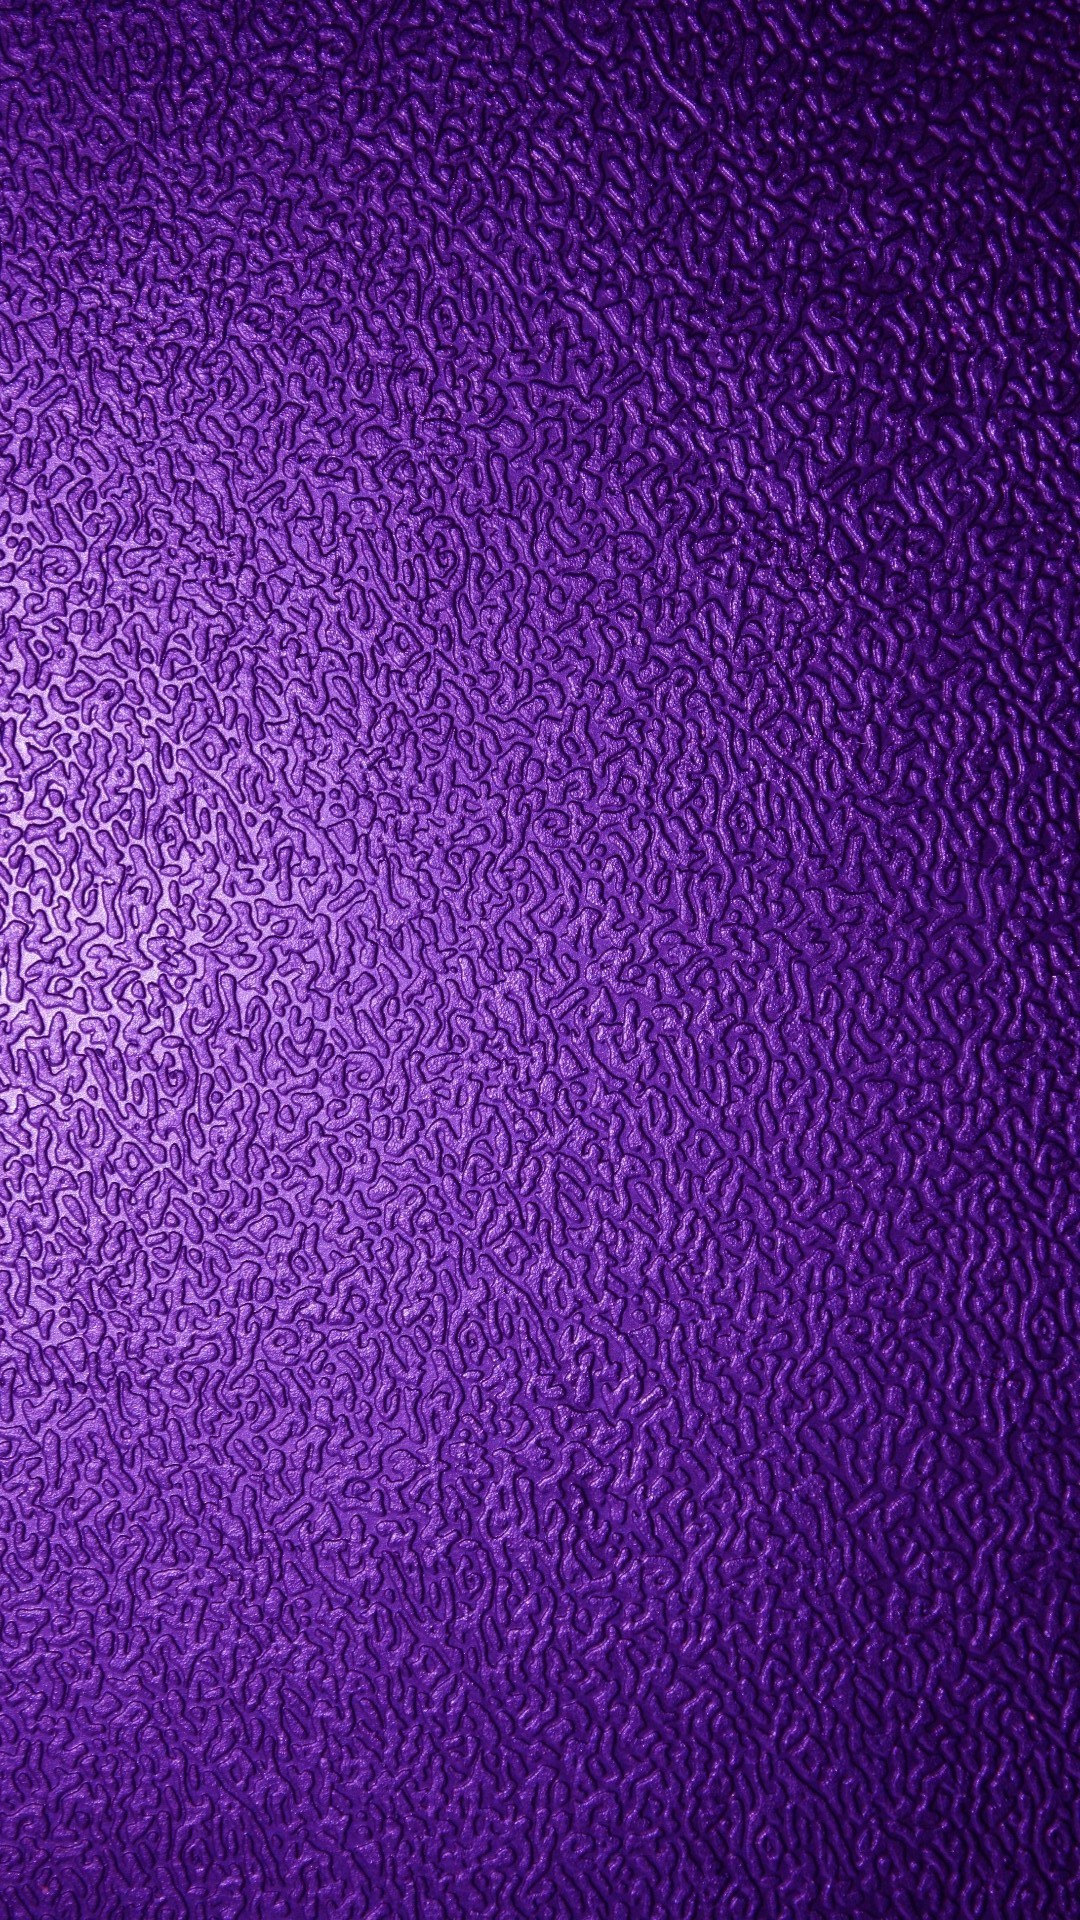 Purple Textured iPhone 8 Wallpaper resolution 1080x1920